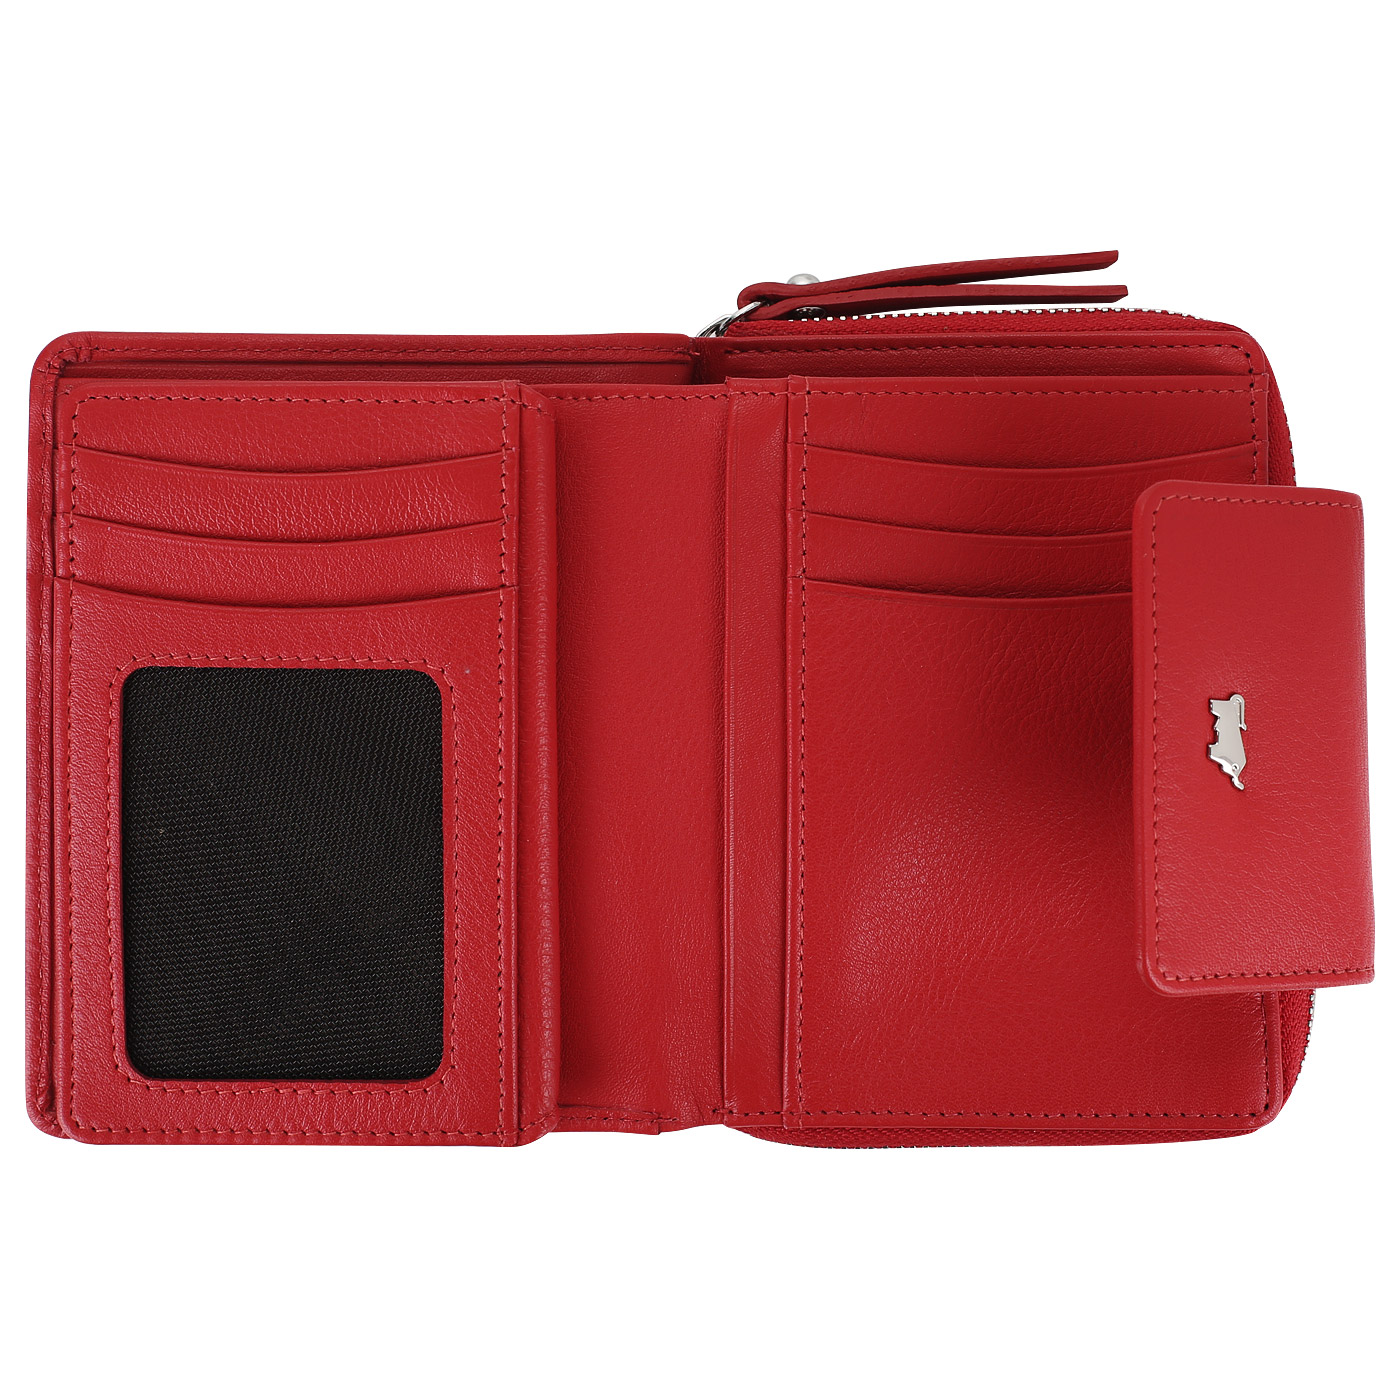 Красный кожаный кошелек Braun Buffel Miami